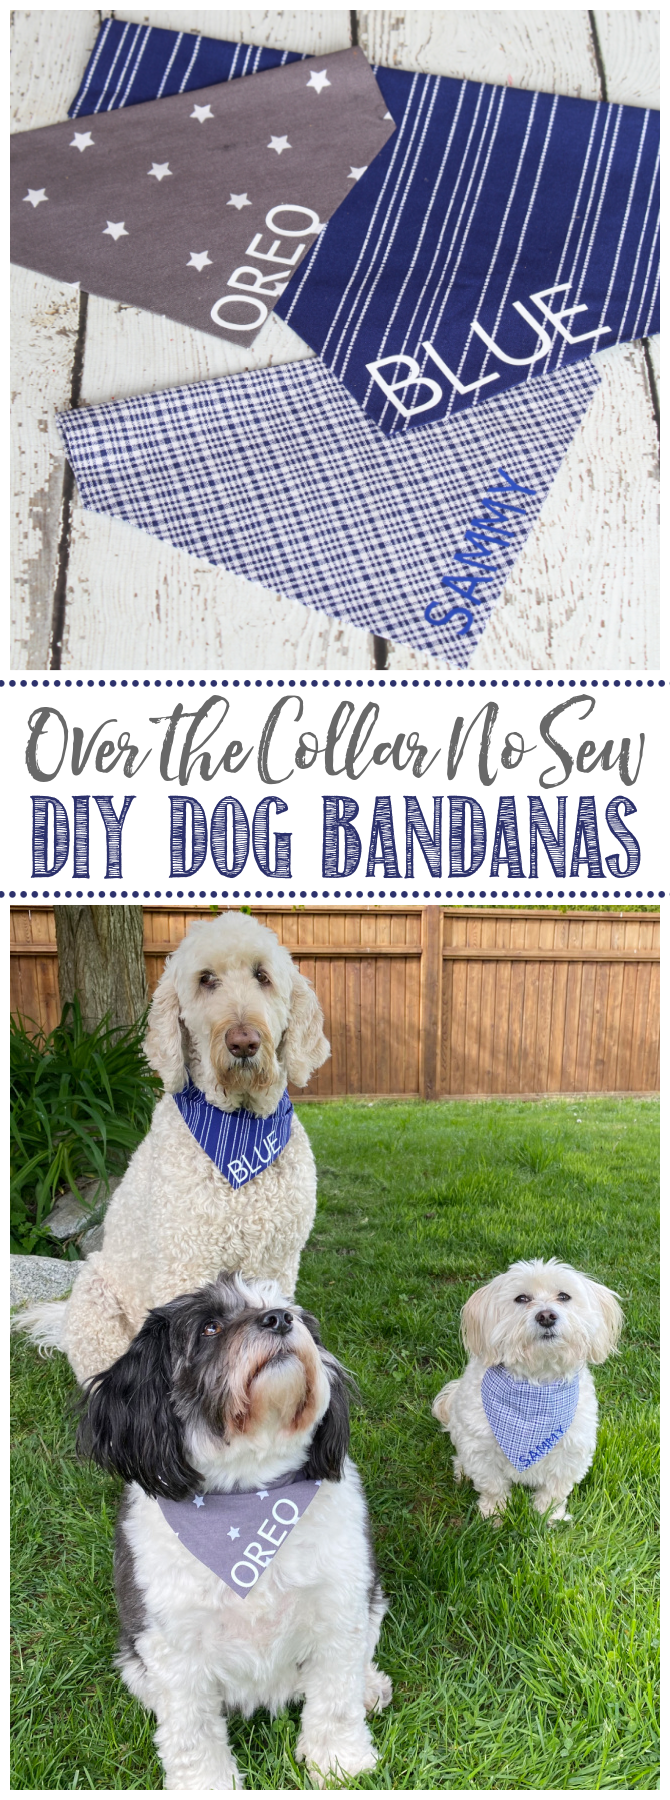 Over the collar no sew DIY dog bandanas on three cute dogs.